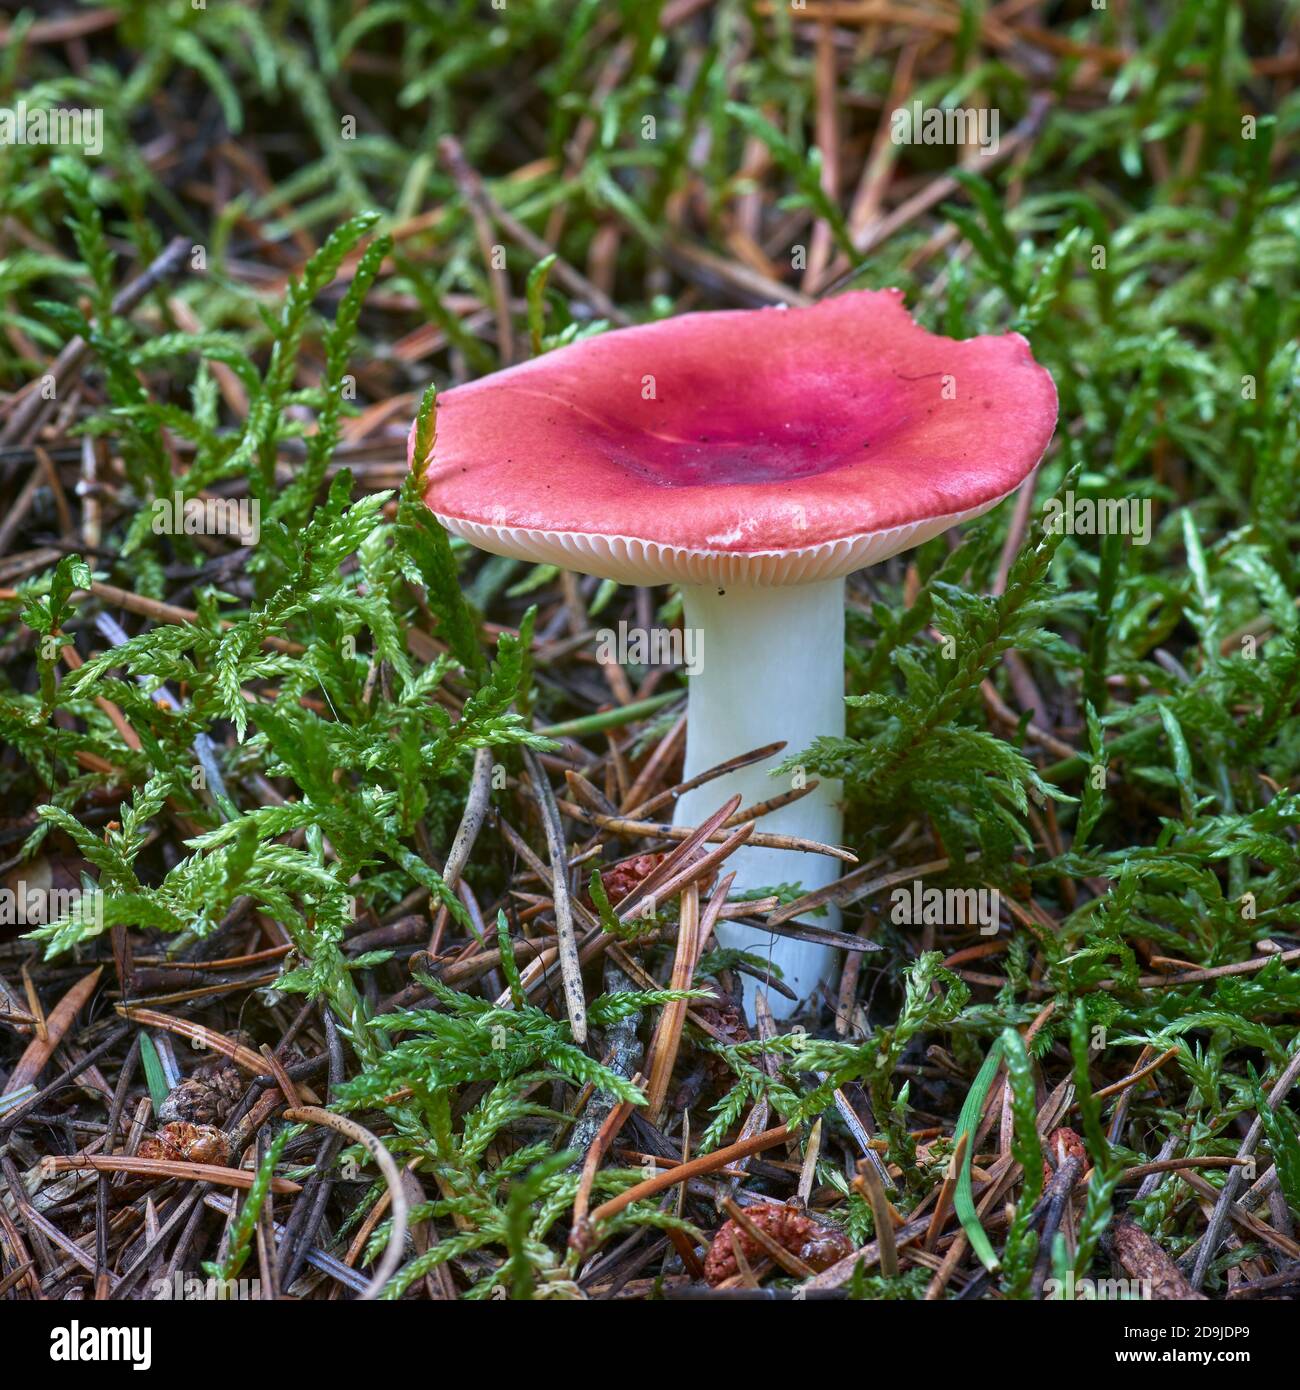 Täubling, der Sickener, ein Basidiomycete-Pilz. Glenlivet, Moray, Schottland. Stockfoto